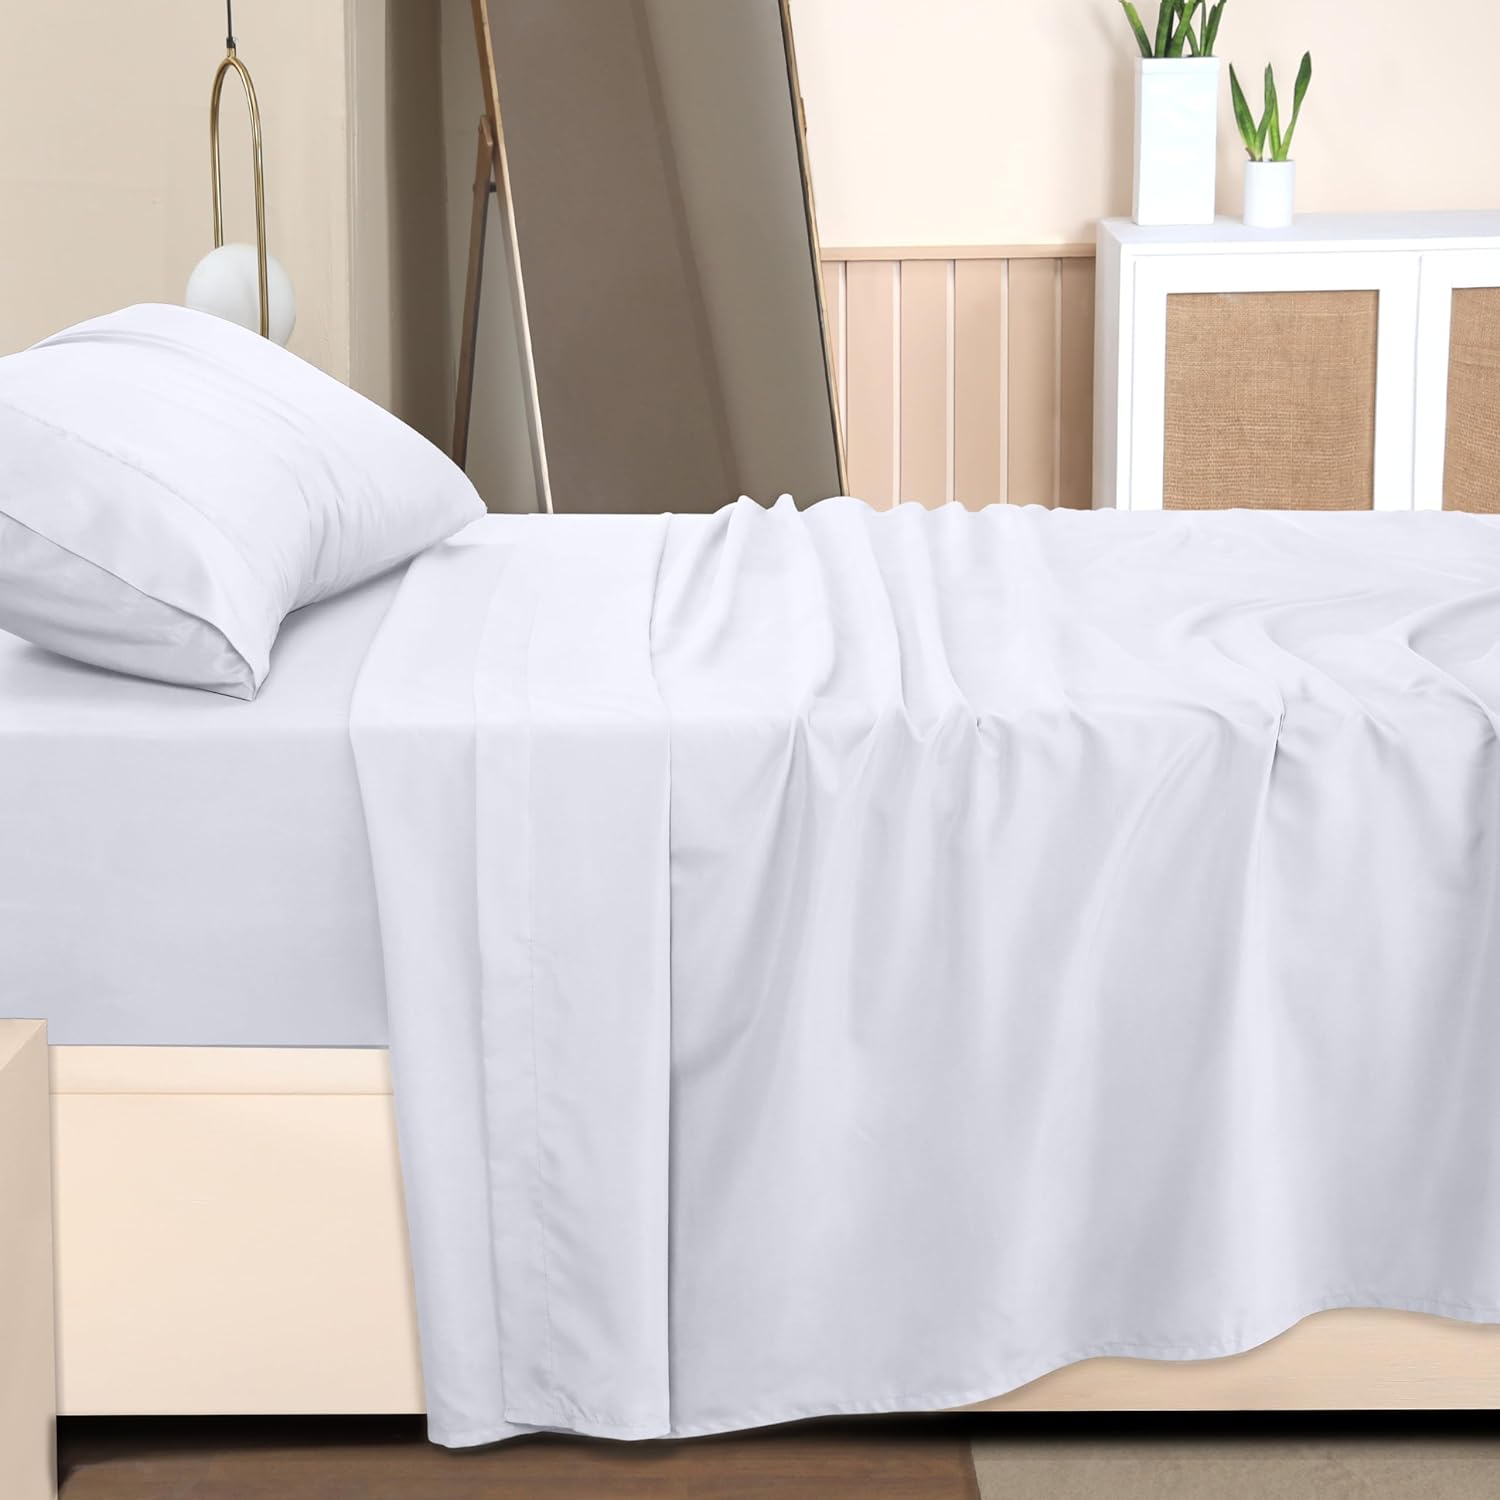 Luxurious Bedsheet Set With Deep Pocket Design